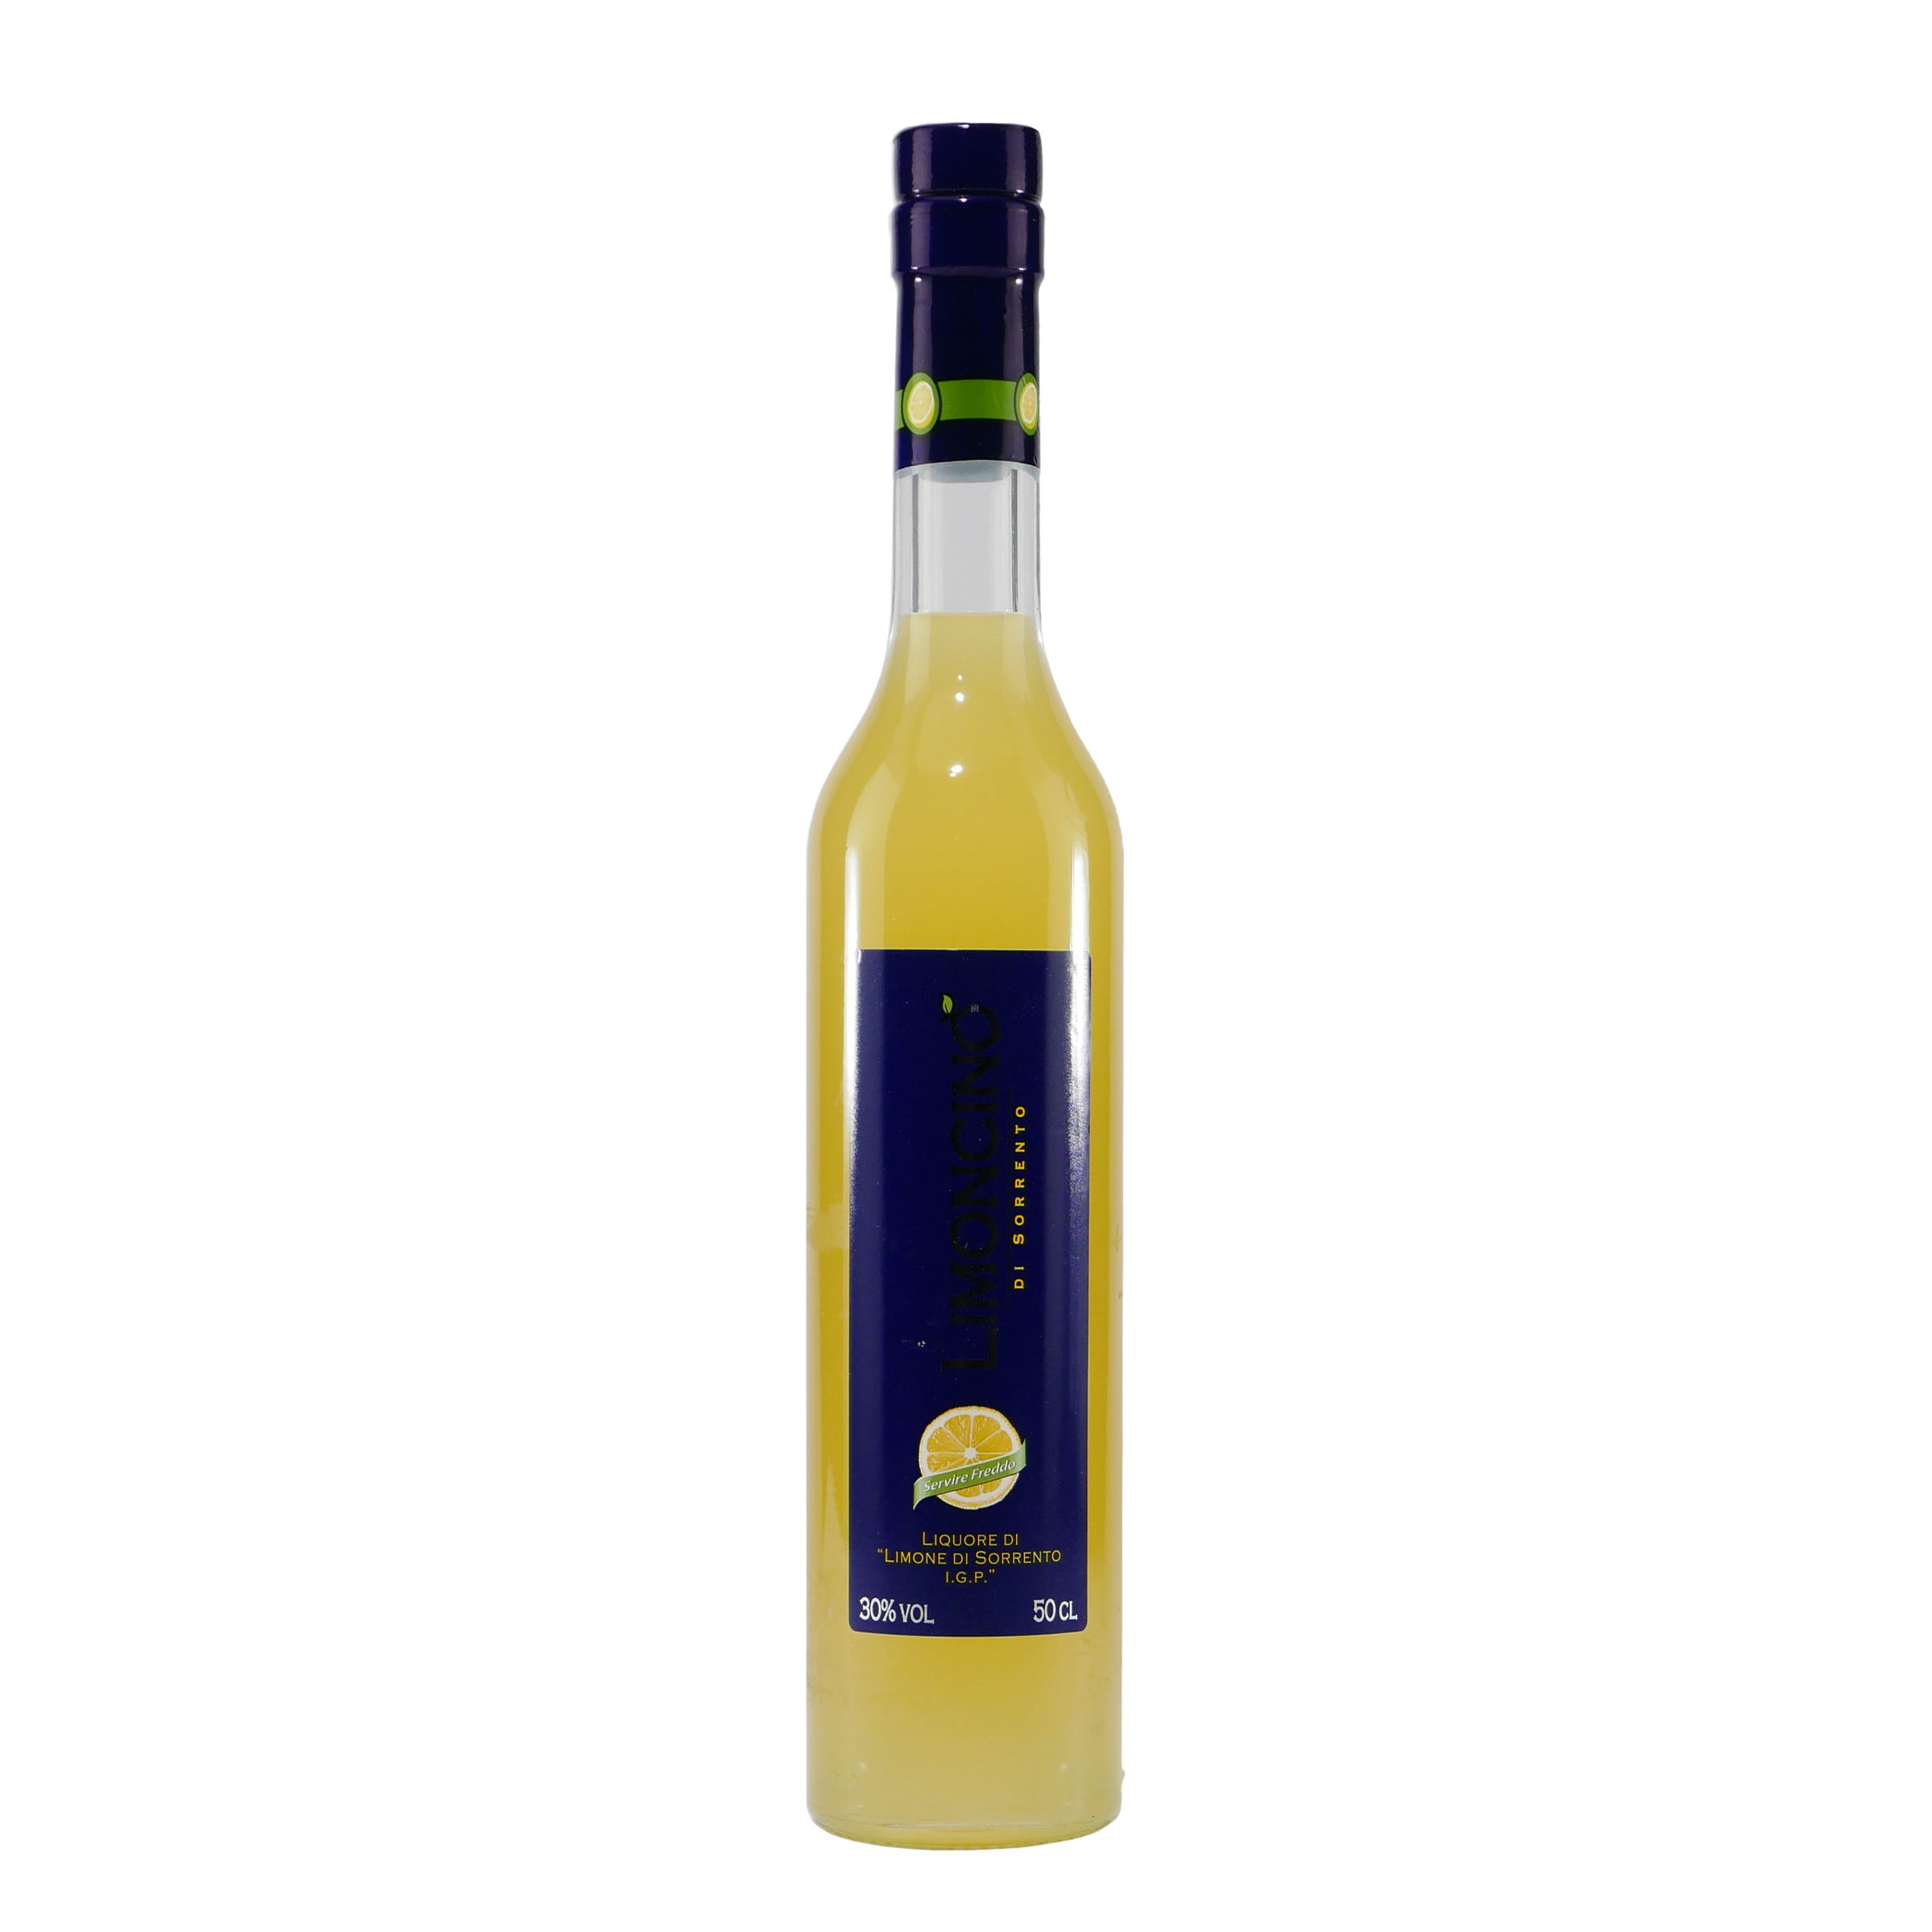 Zitronenlikör aus Italien Sorrento - Limoncino di